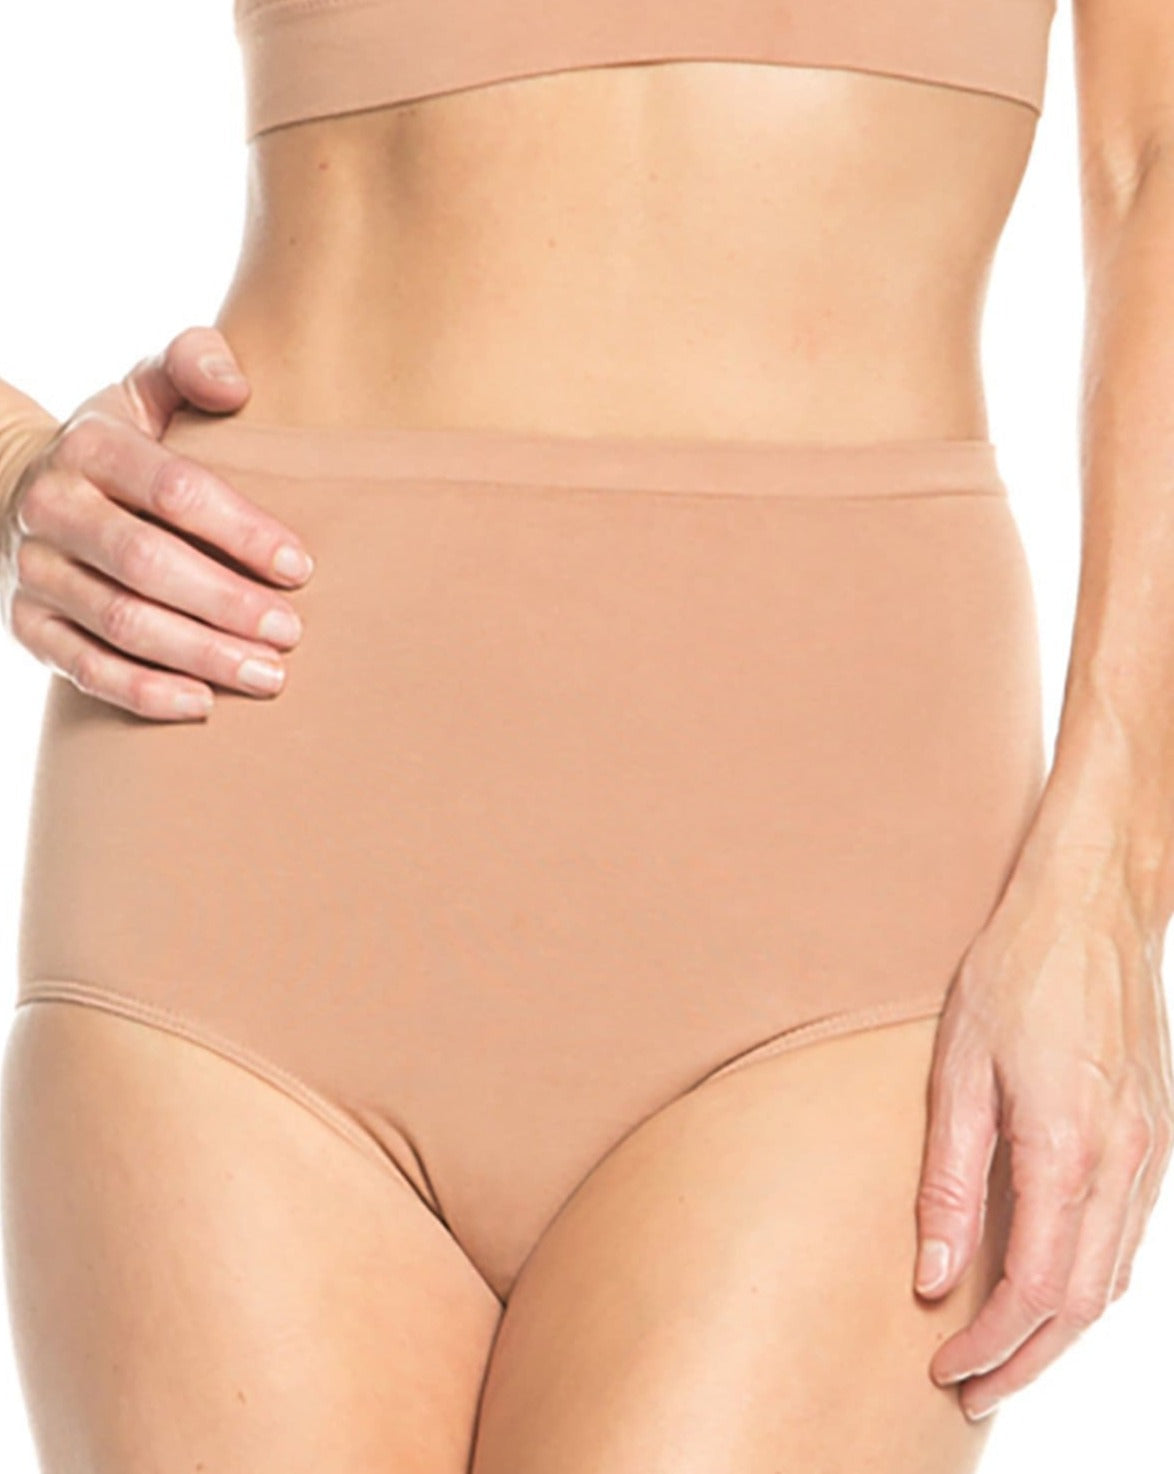 Rhian Hip Stretch Panties for women plus size seamless Panty Full